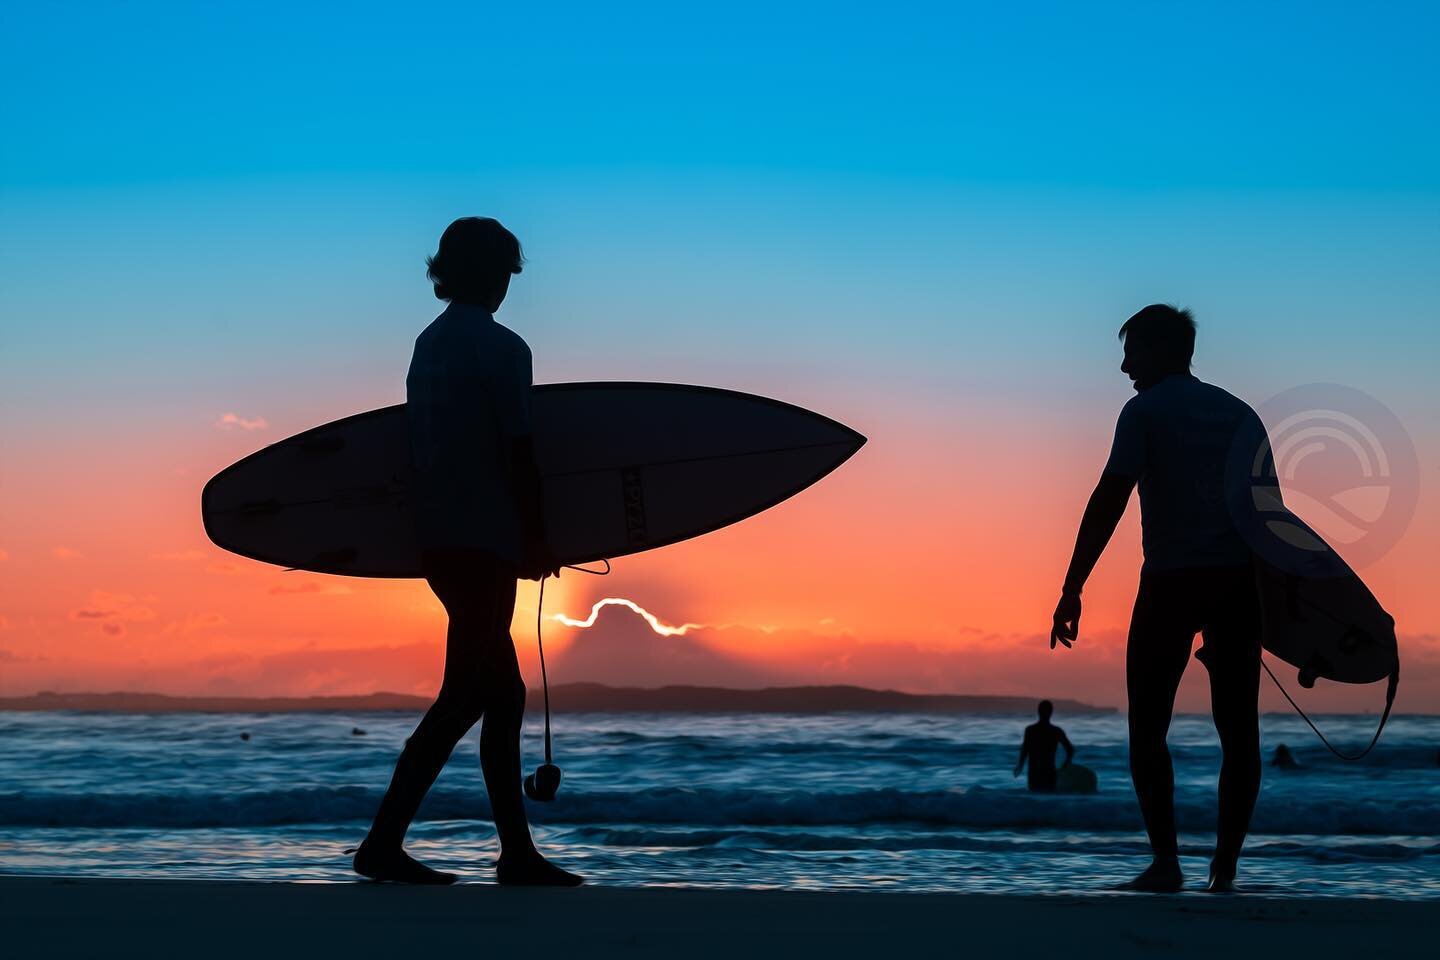 Surf Lessons
Sunrise 19th May 2023
@cronullasurfingacademy #cronullabeach #cronulla #beach #surfing #silhouette #sunrise